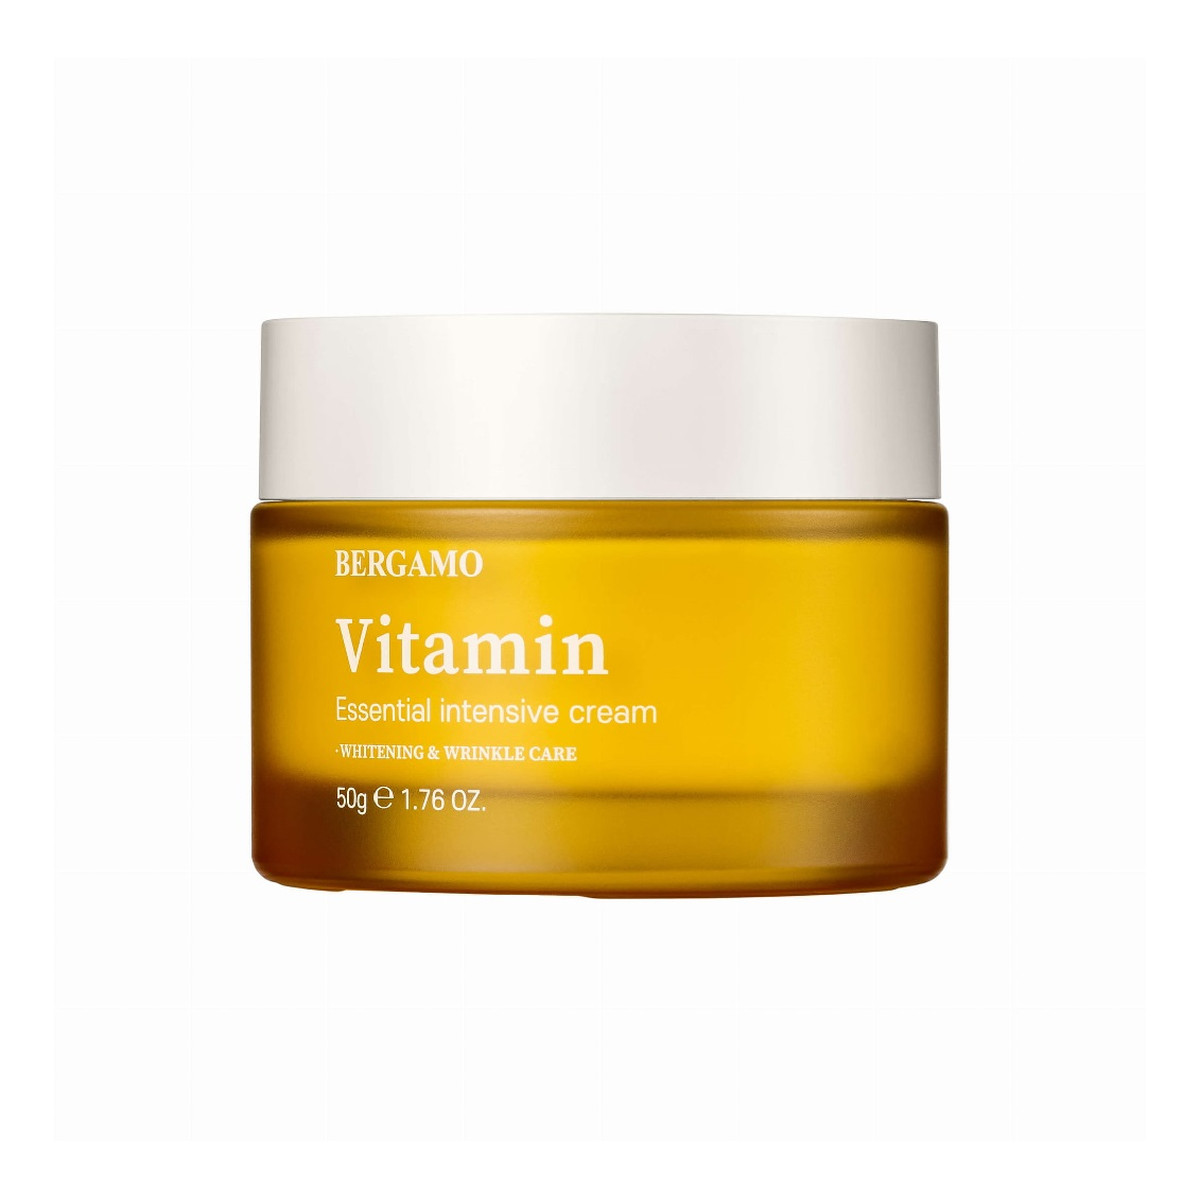 Bergamo Vitamin Essential Intensive Cream Krem do twarzy z witaminą c 50g